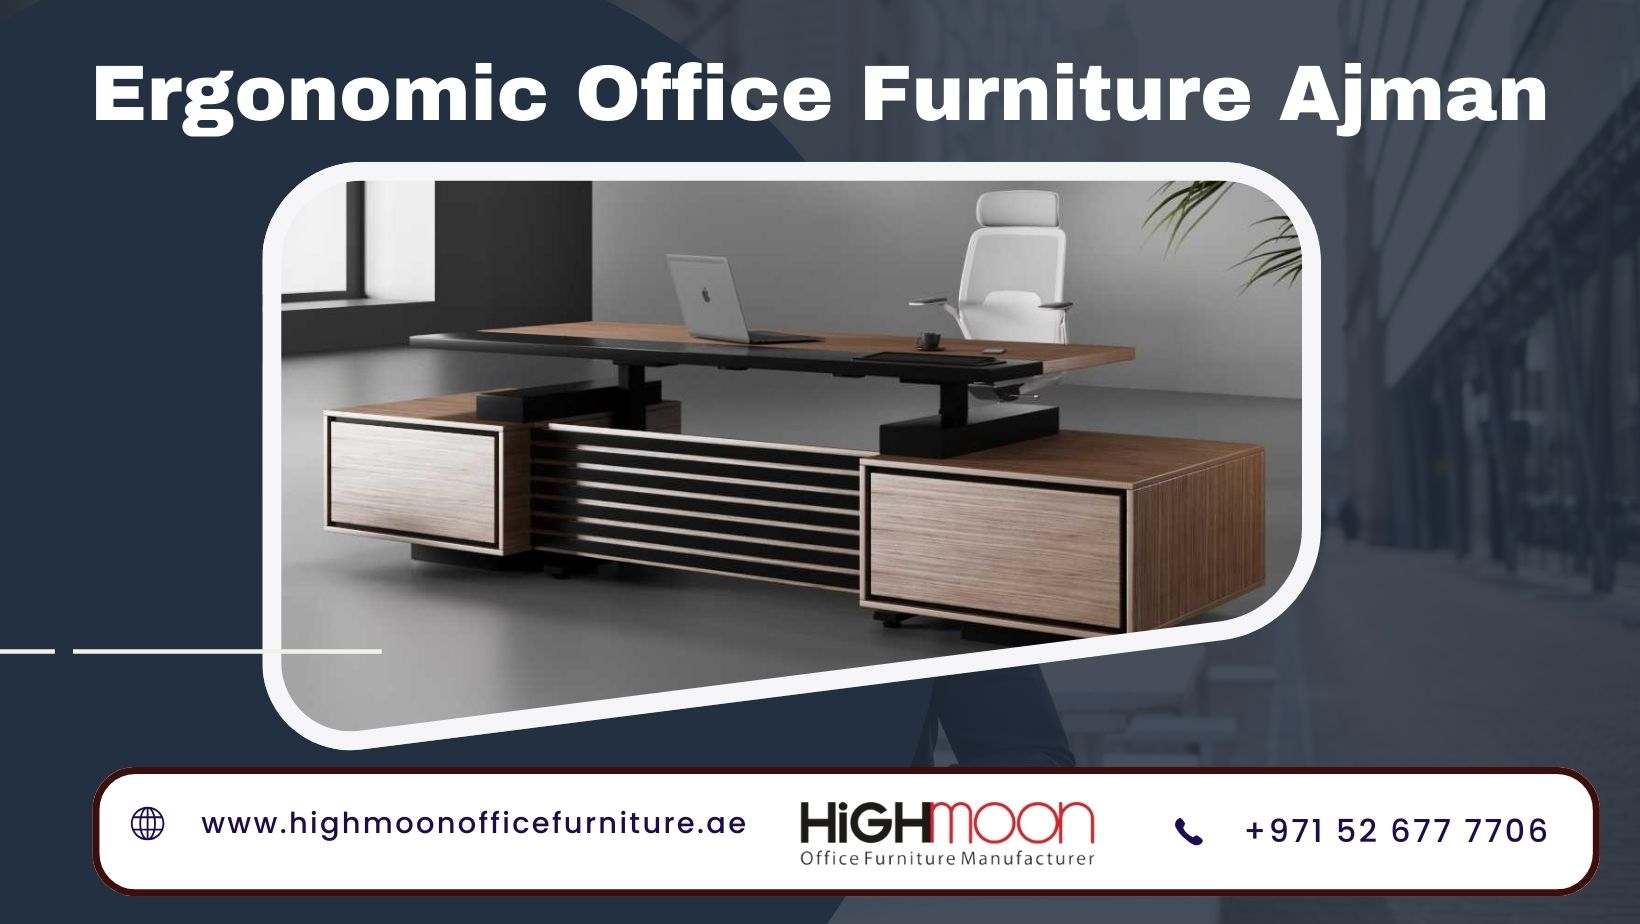 Ergonomic Office Furniture Ajman